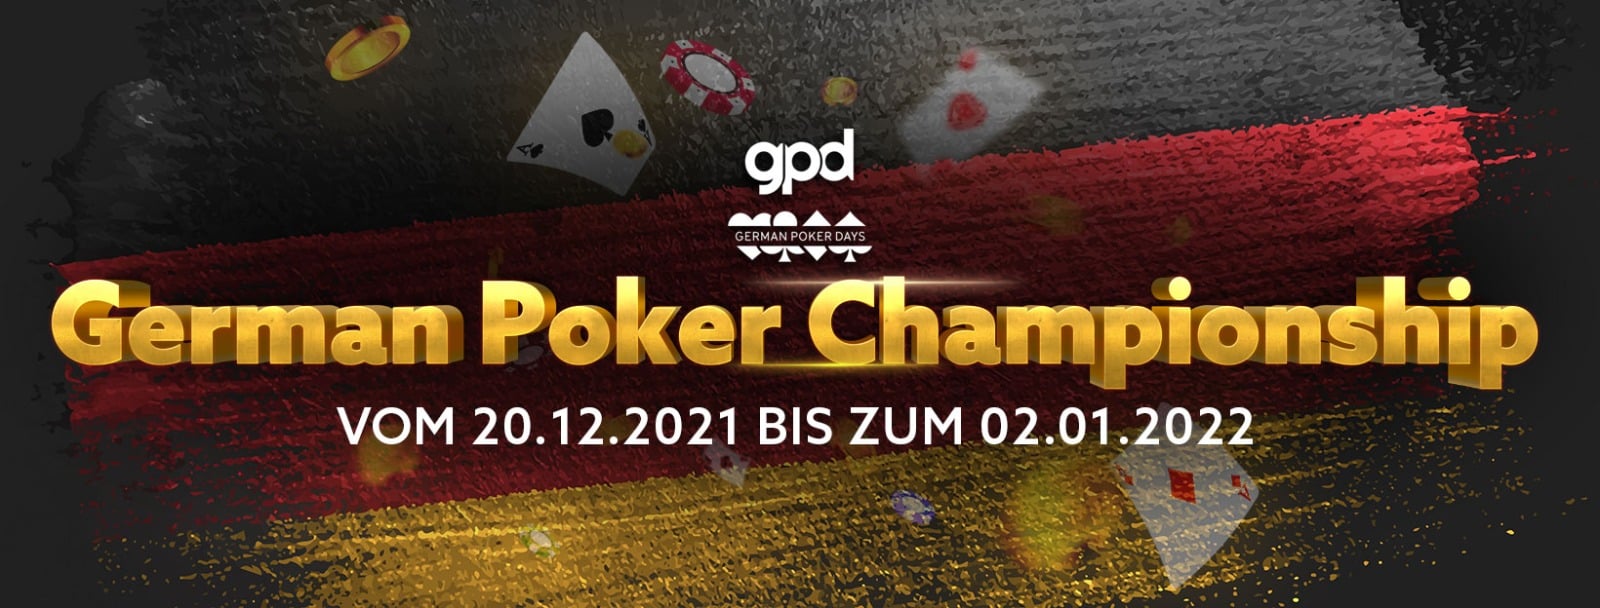 German Poker Championship – Starttag 5